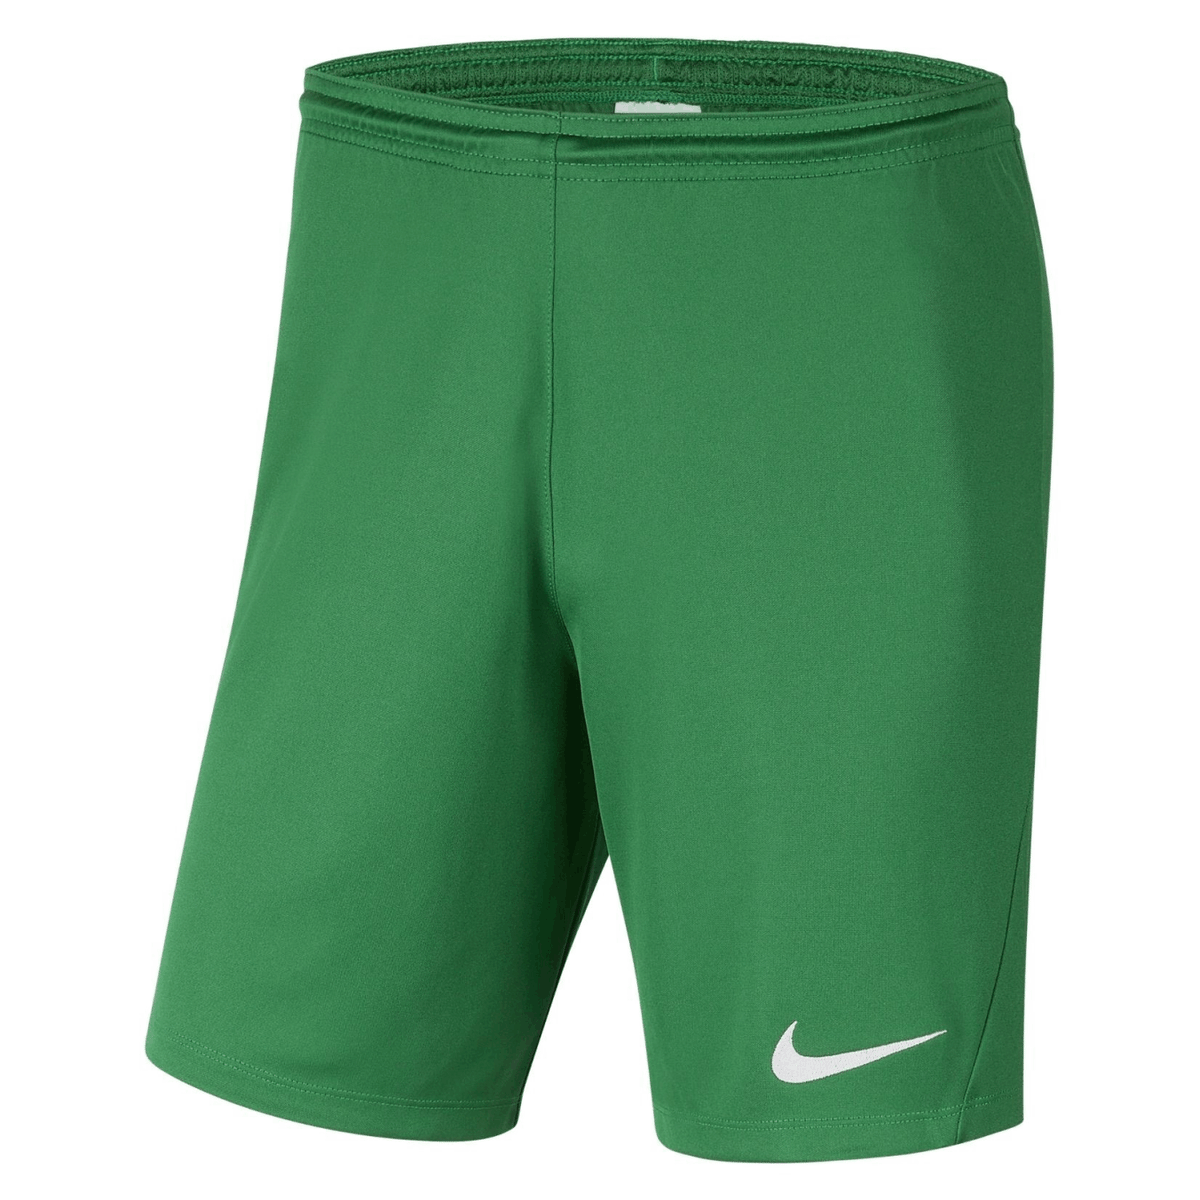 Wollaton - Park III Shorts - Green - Fanatics Supplies